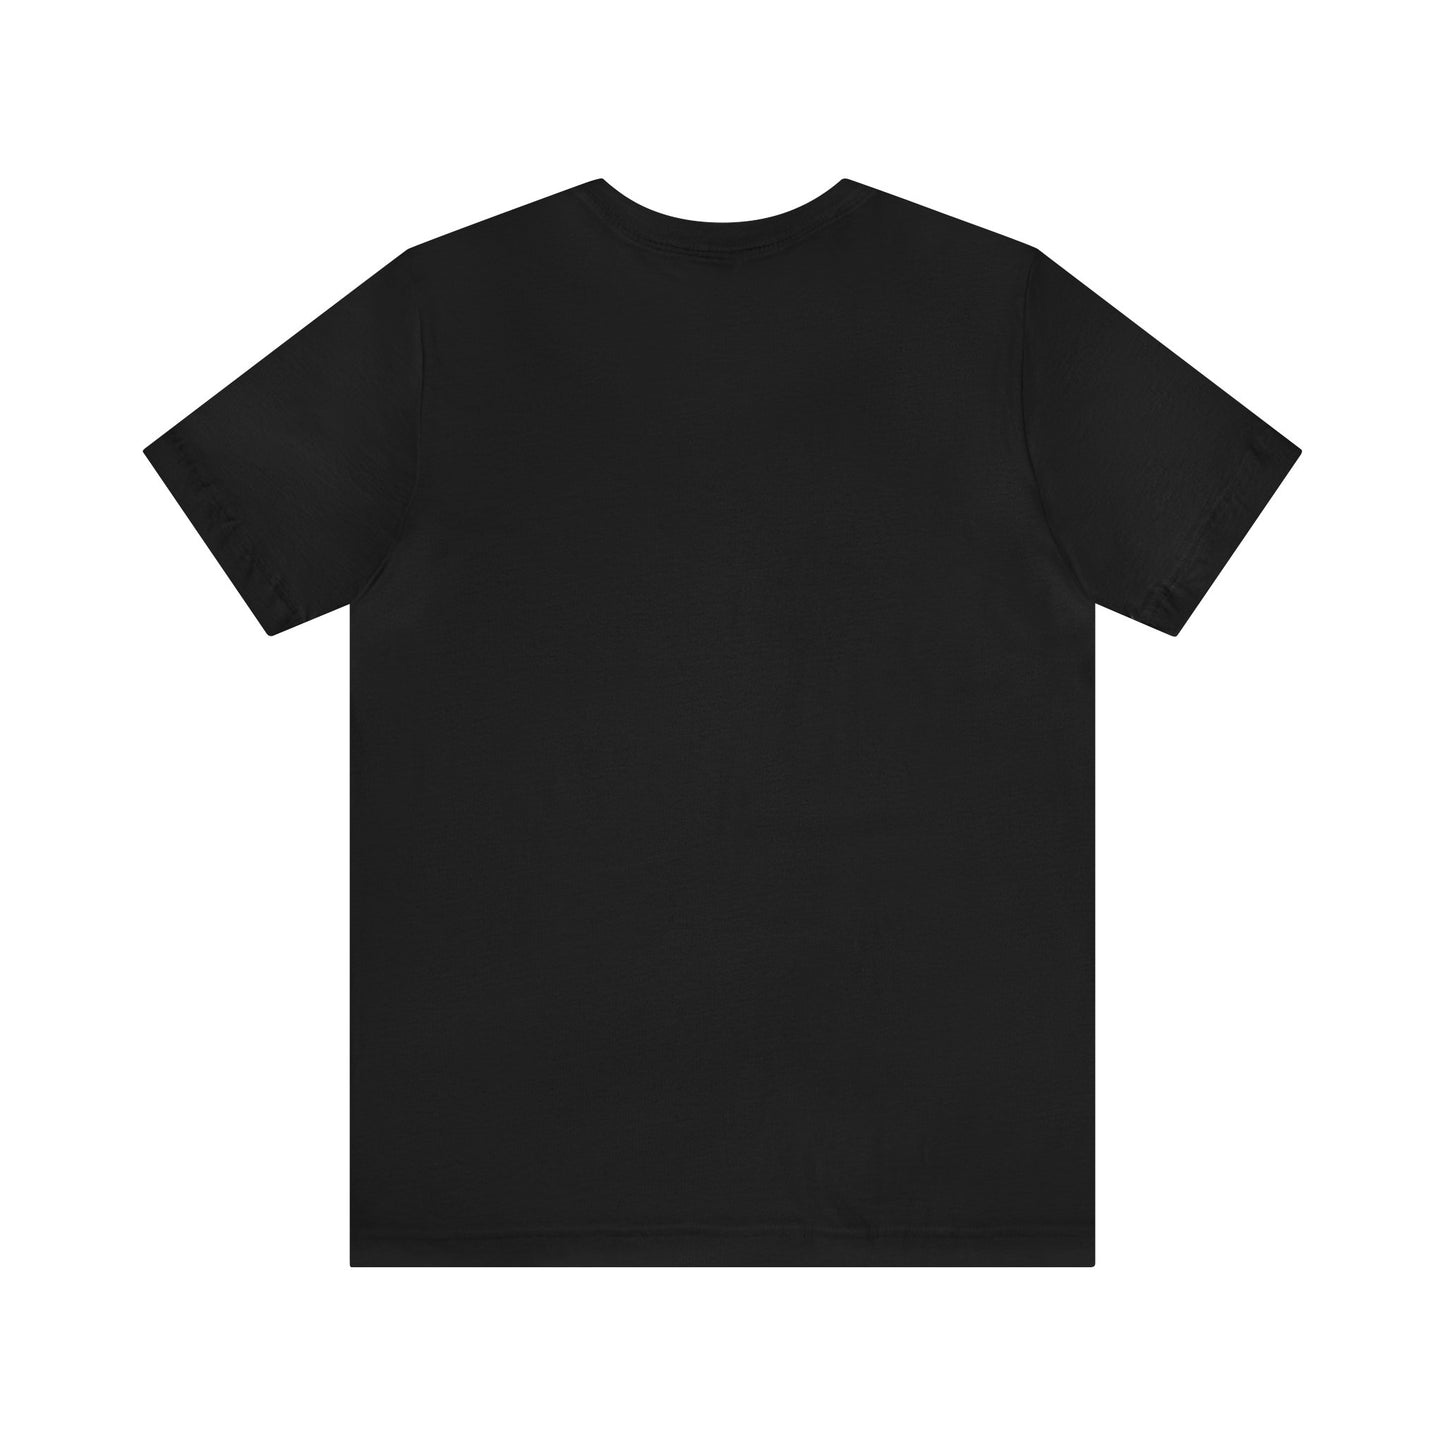 Birthday T-Shirt | Birthday Apparel T-Shirt Petrova Designs